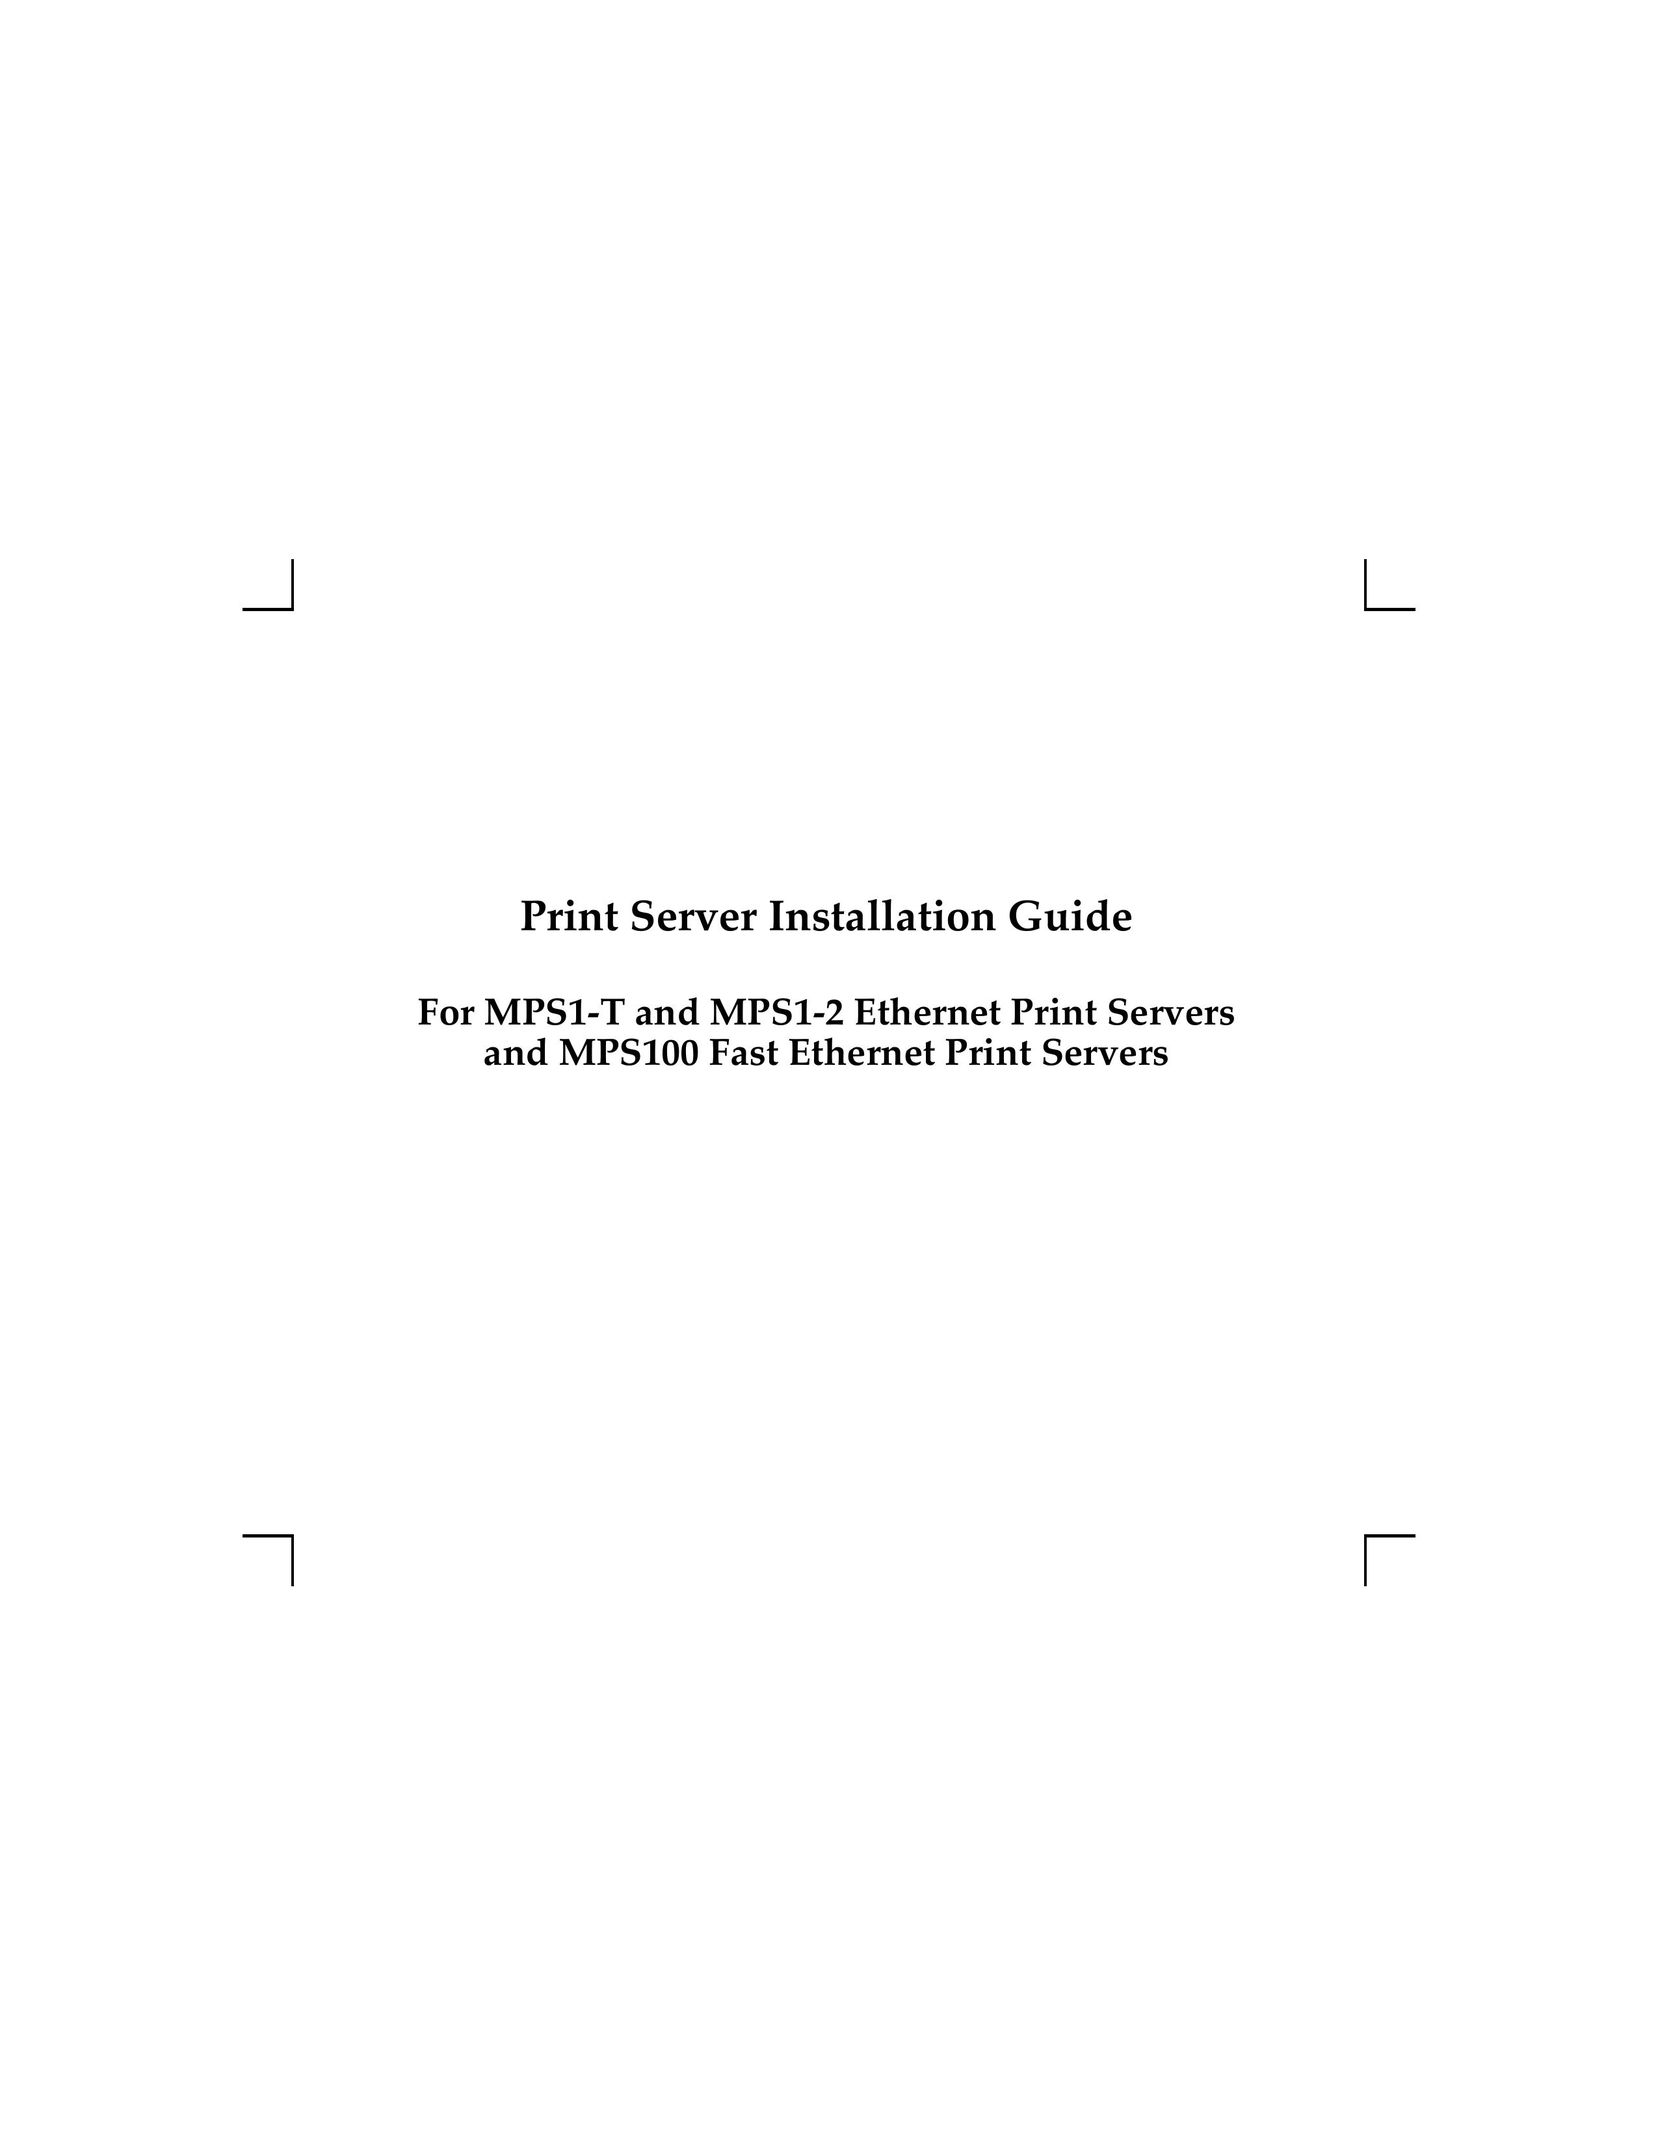 Lantronix MPS1-T Printer User Manual